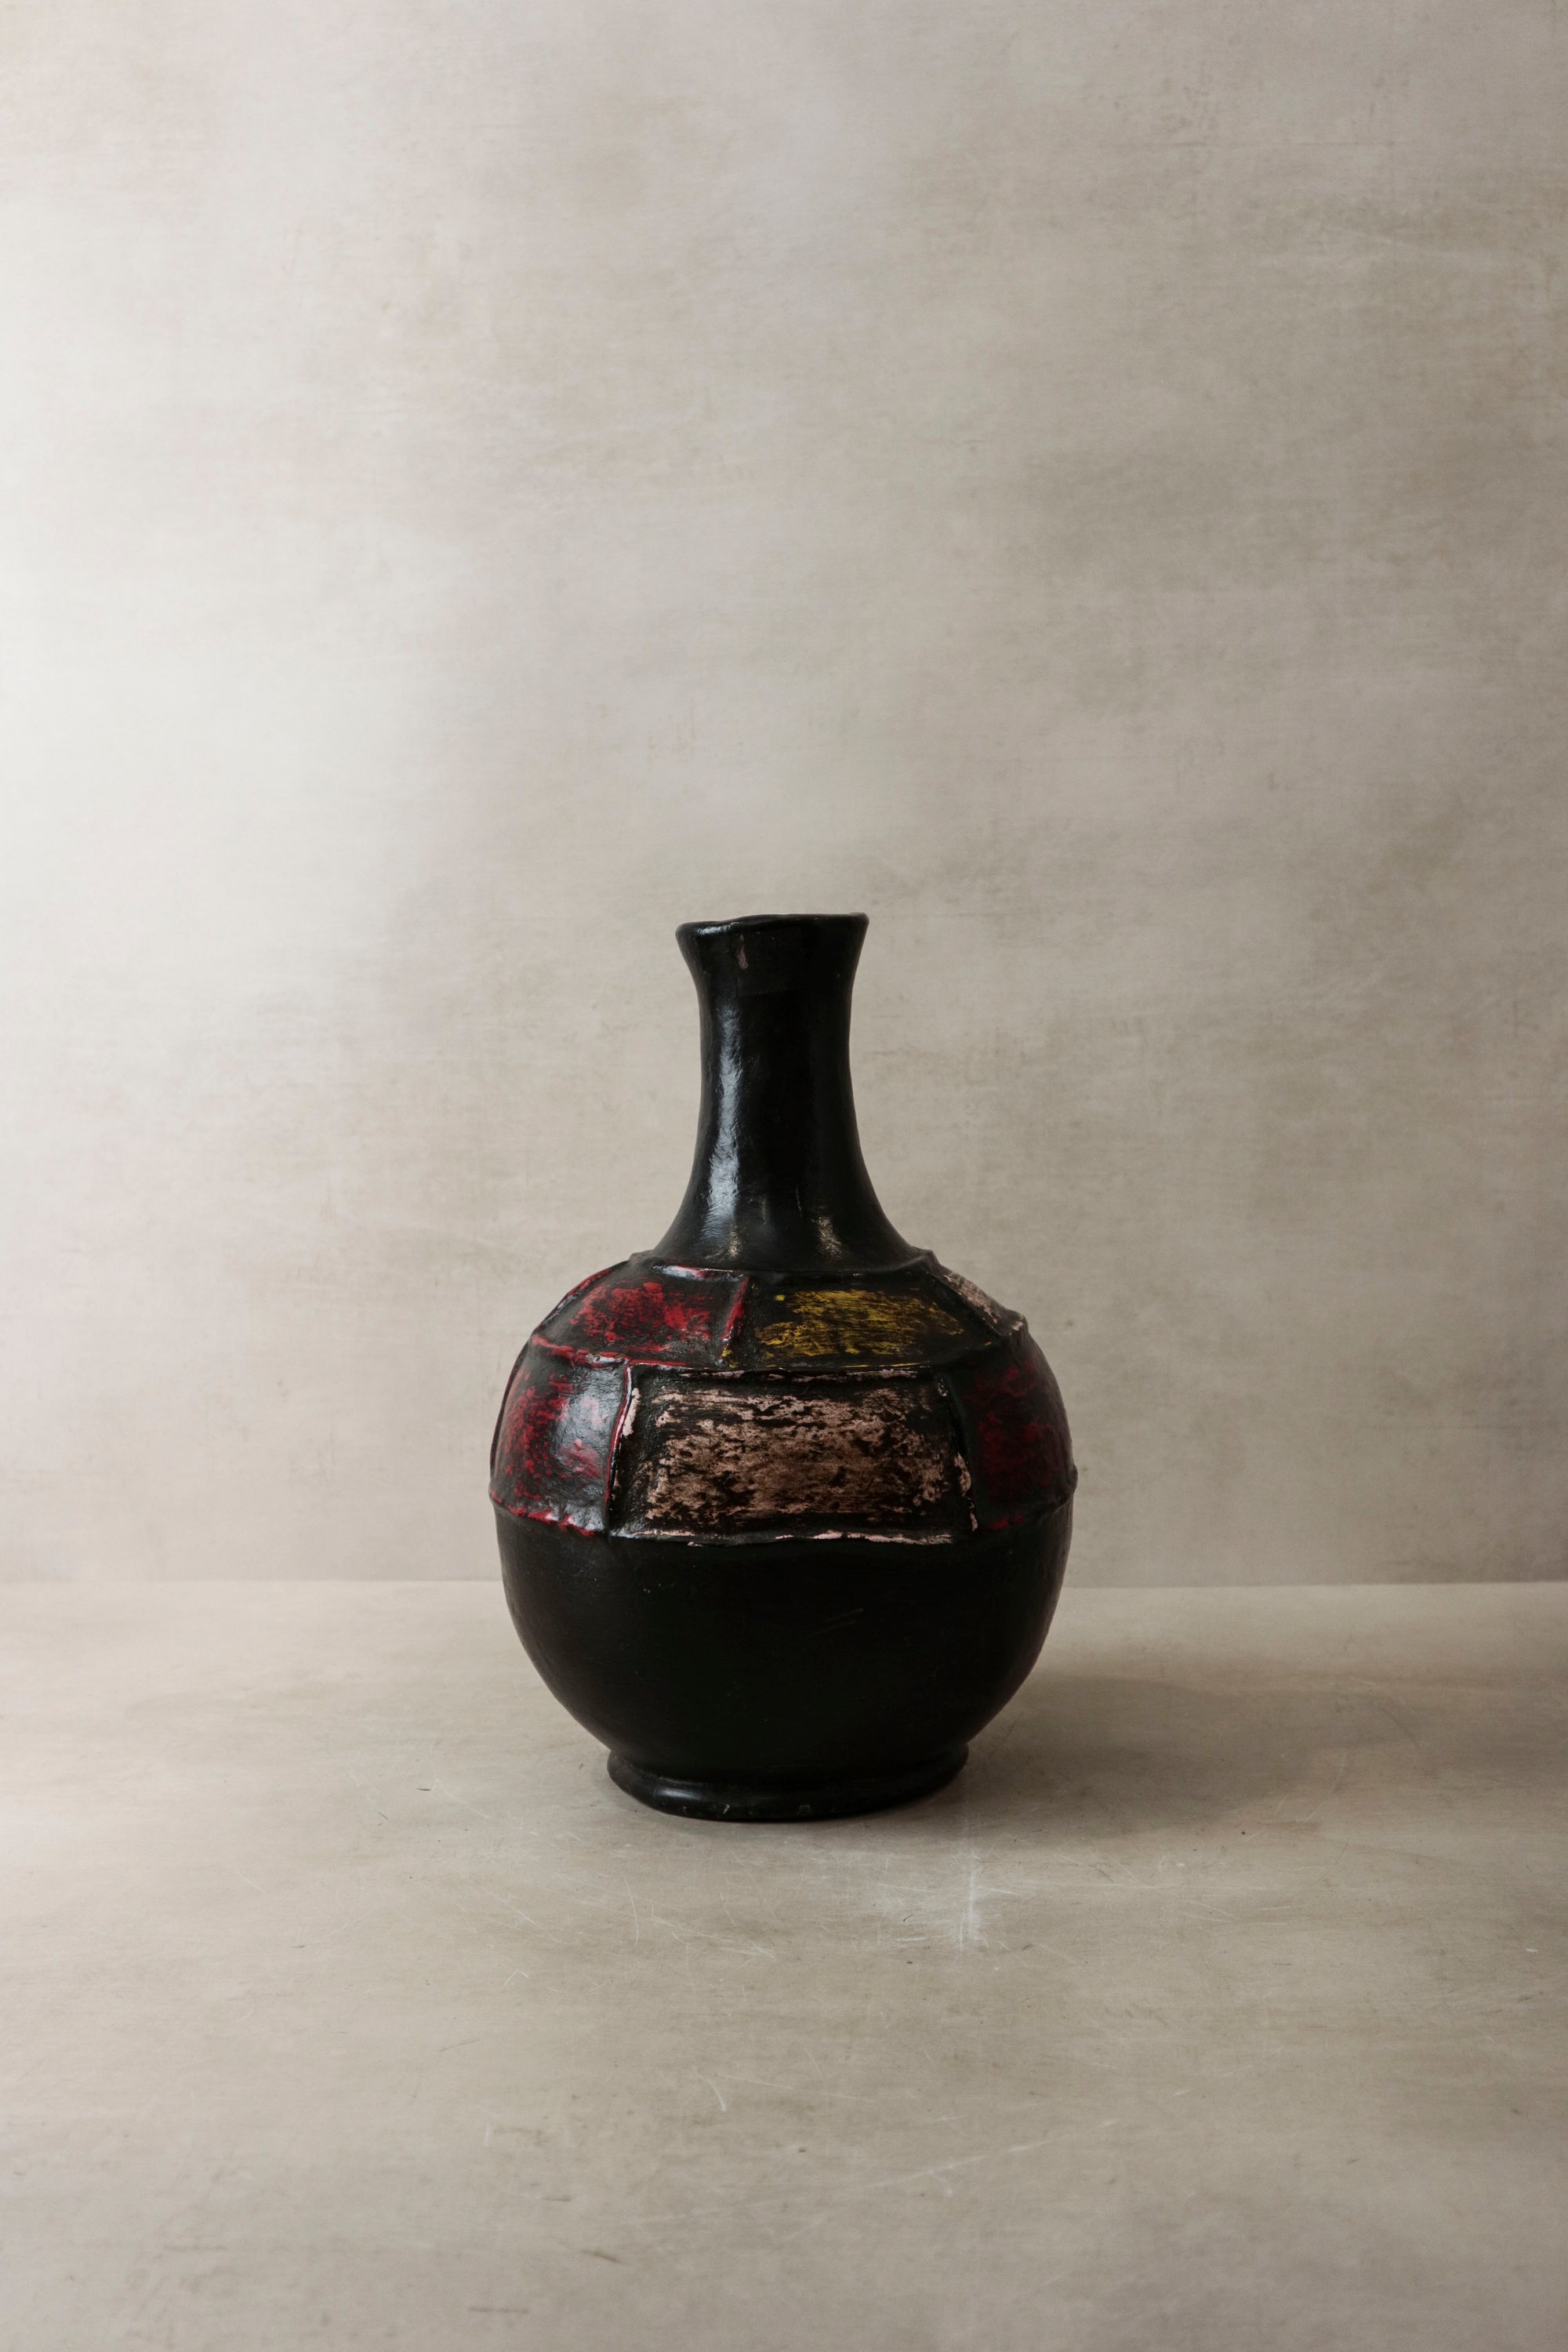 Mangbetu Clay Vase, Tanzania - 41.3